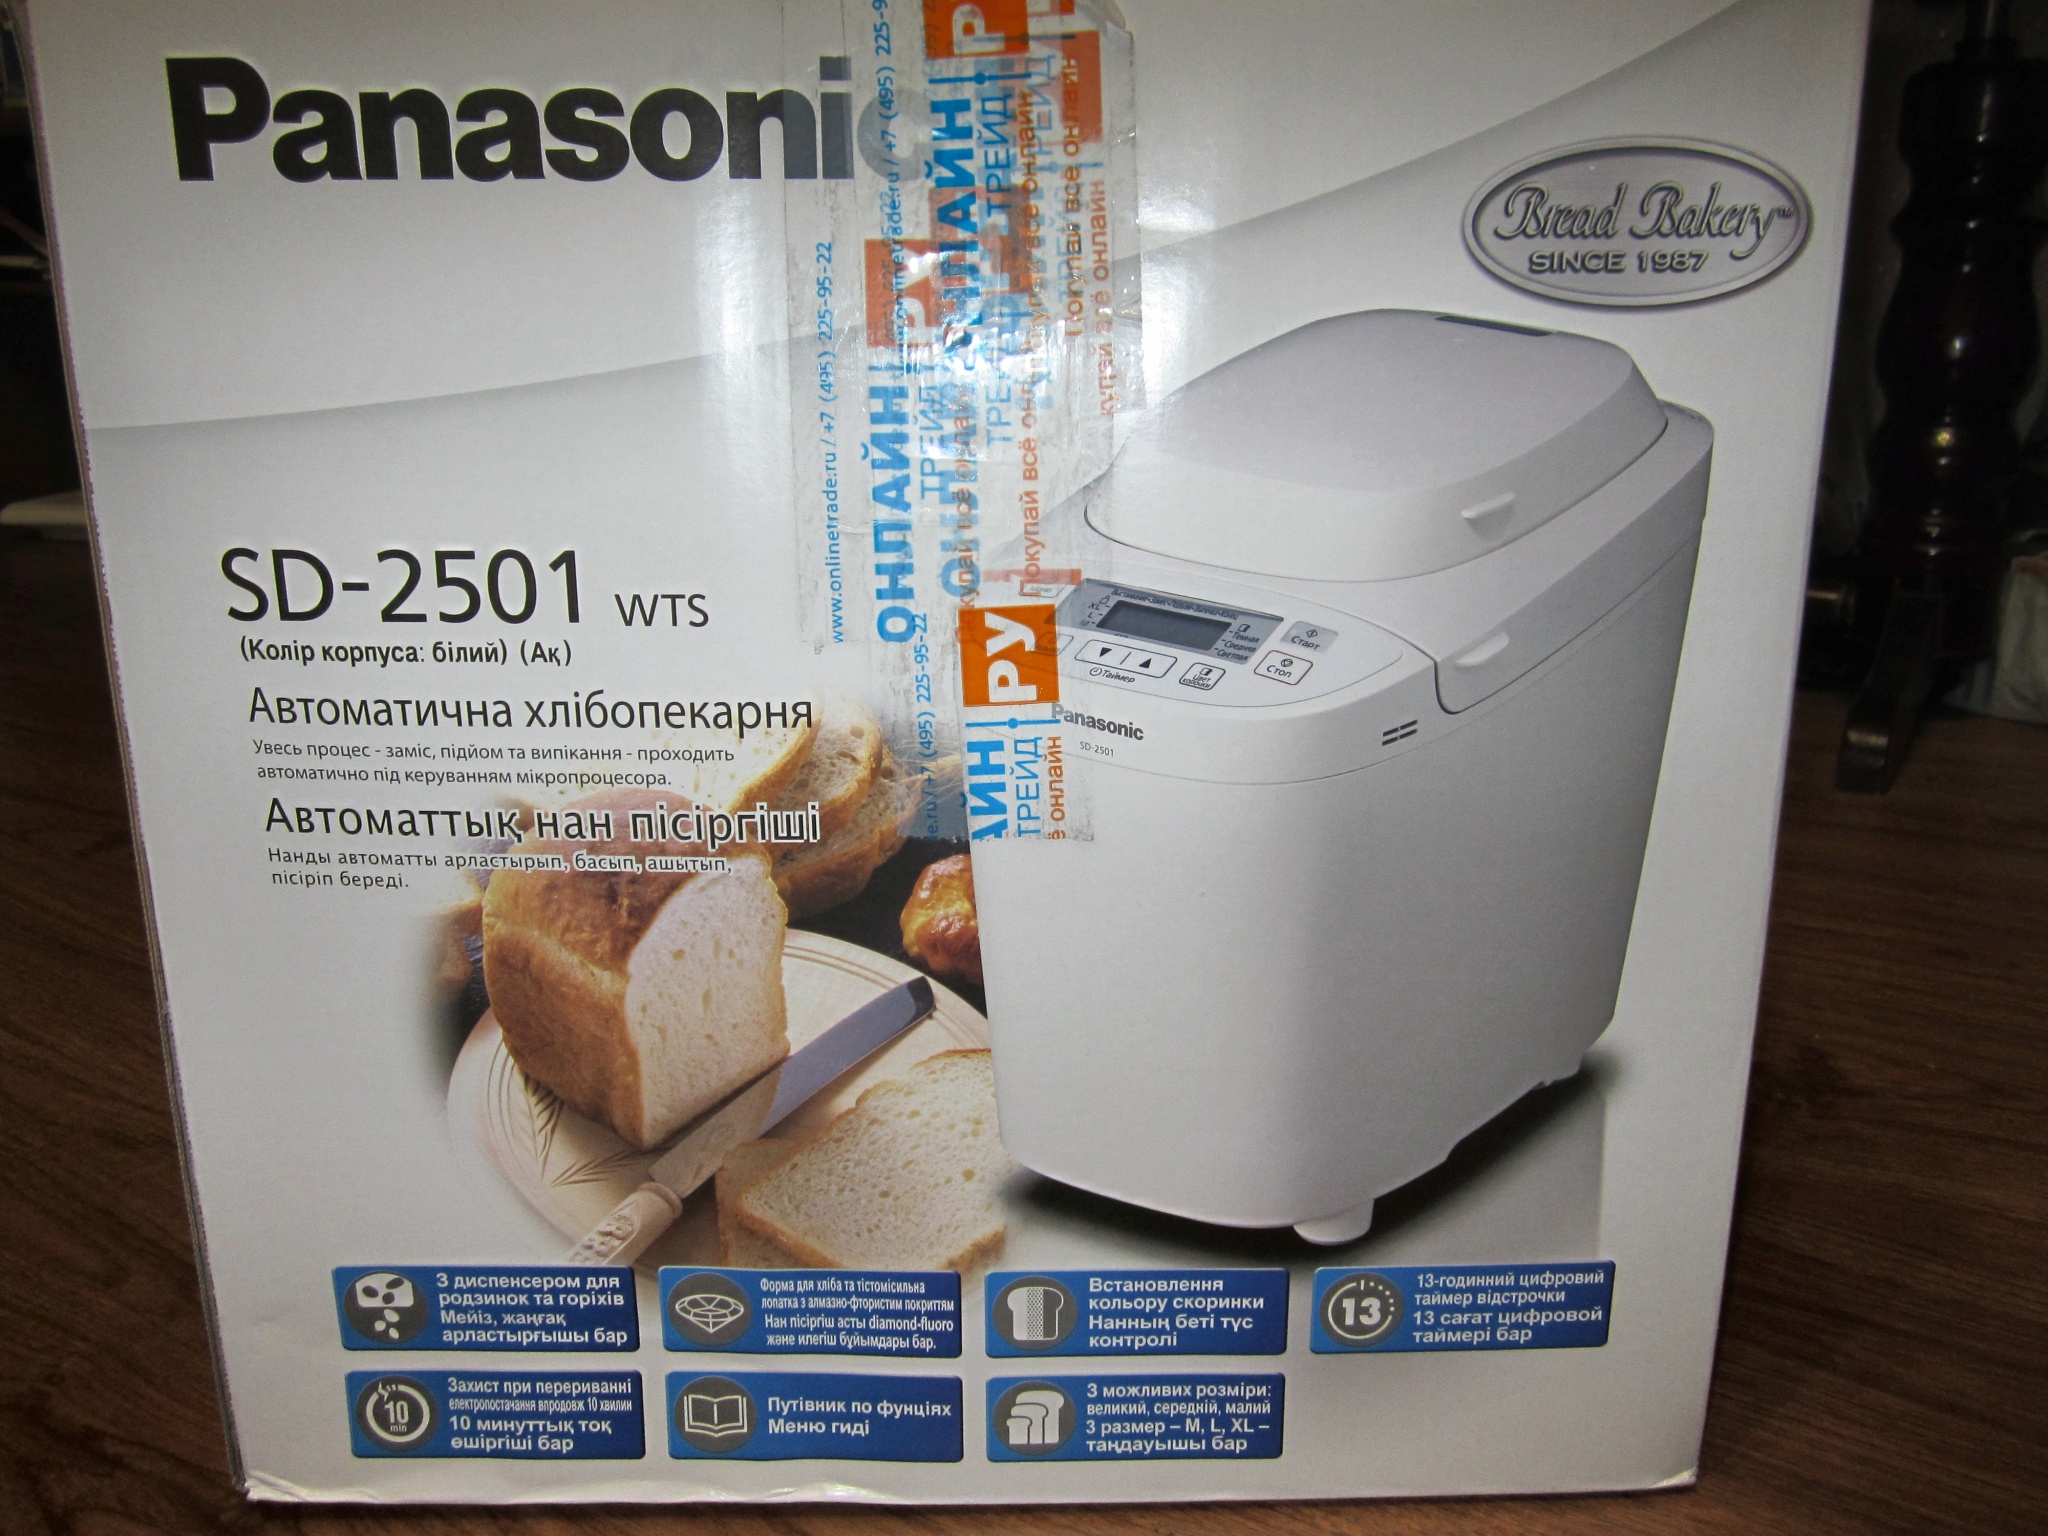 Рецепт хлеба панасоник 2501. Panasonic SD-2501wts. Хлебопечь Panasonic SD-2501. Panasonic SD-2501wts печь. Хлебопечка Панасоник СД 2501 рецепты.